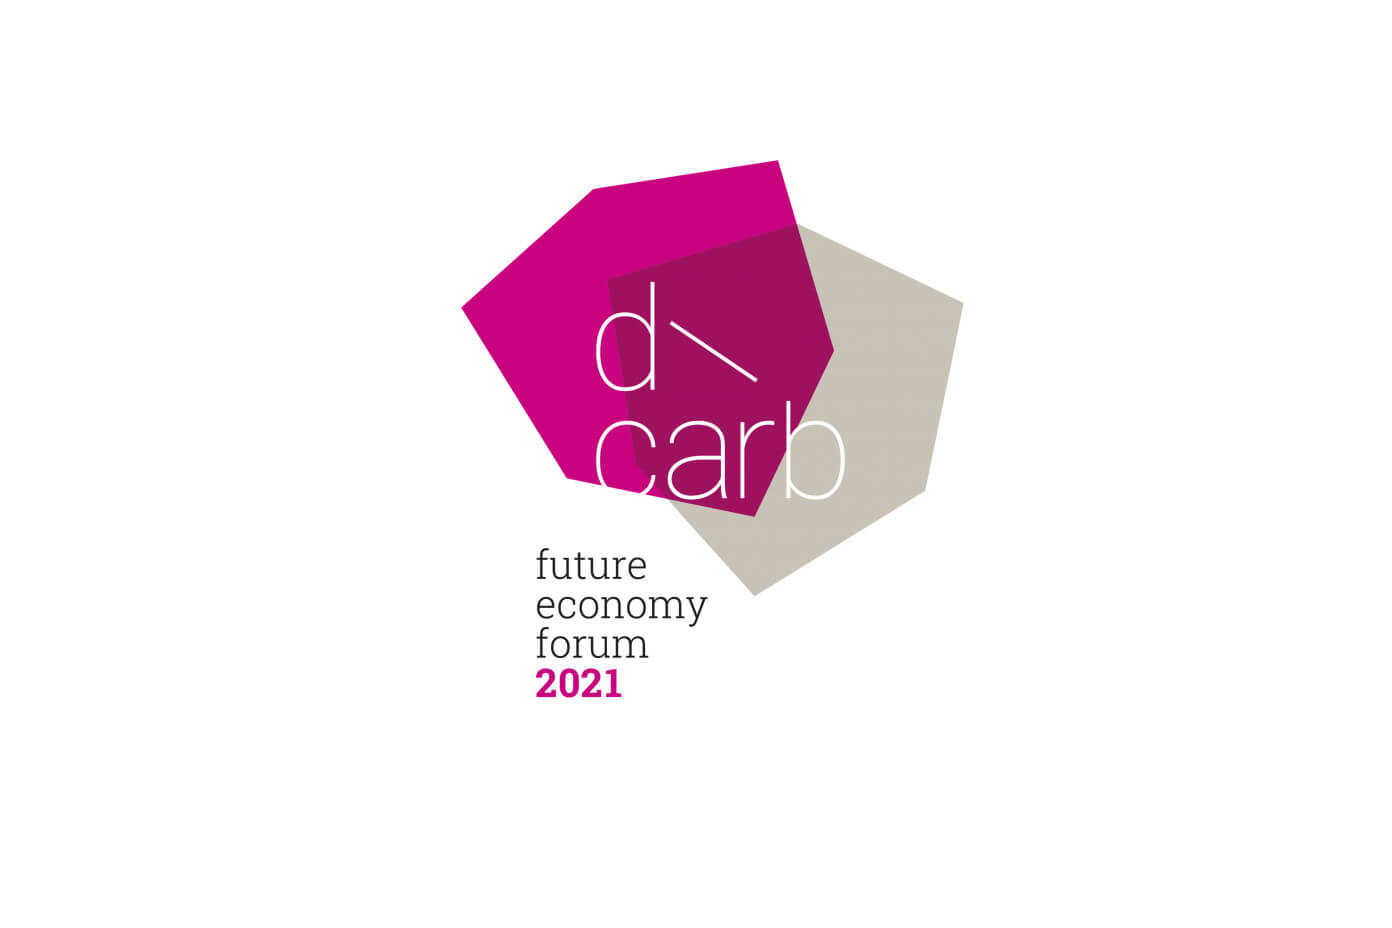 dcarb future economy forum Logo 2021